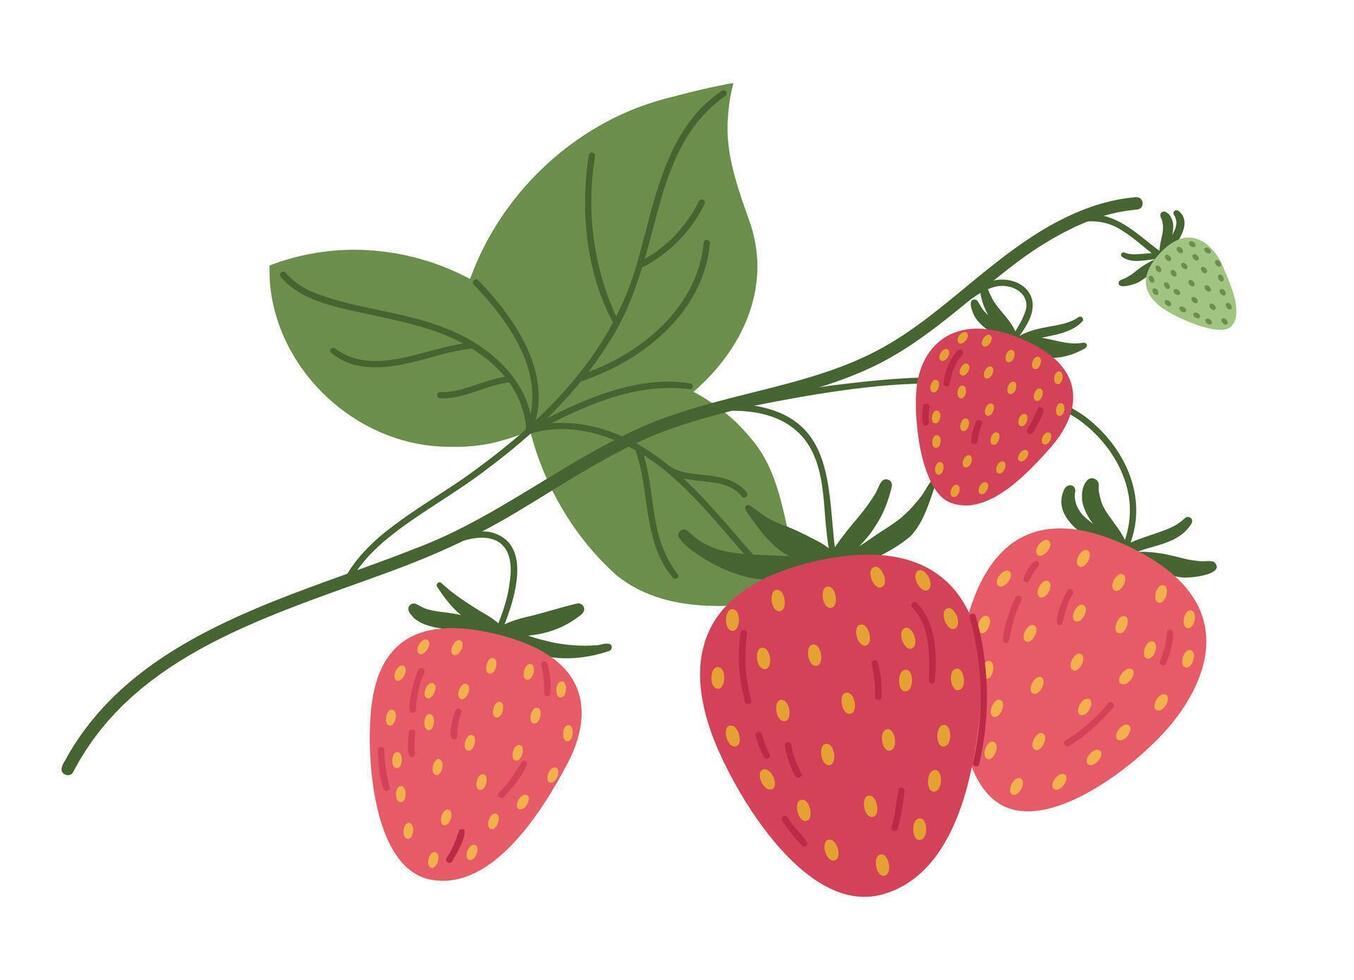 mano dibujado fresas comestible rojo bayas para sano nutrición, delicioso bosque fresa rama plano vector ilustración. jugoso fresas